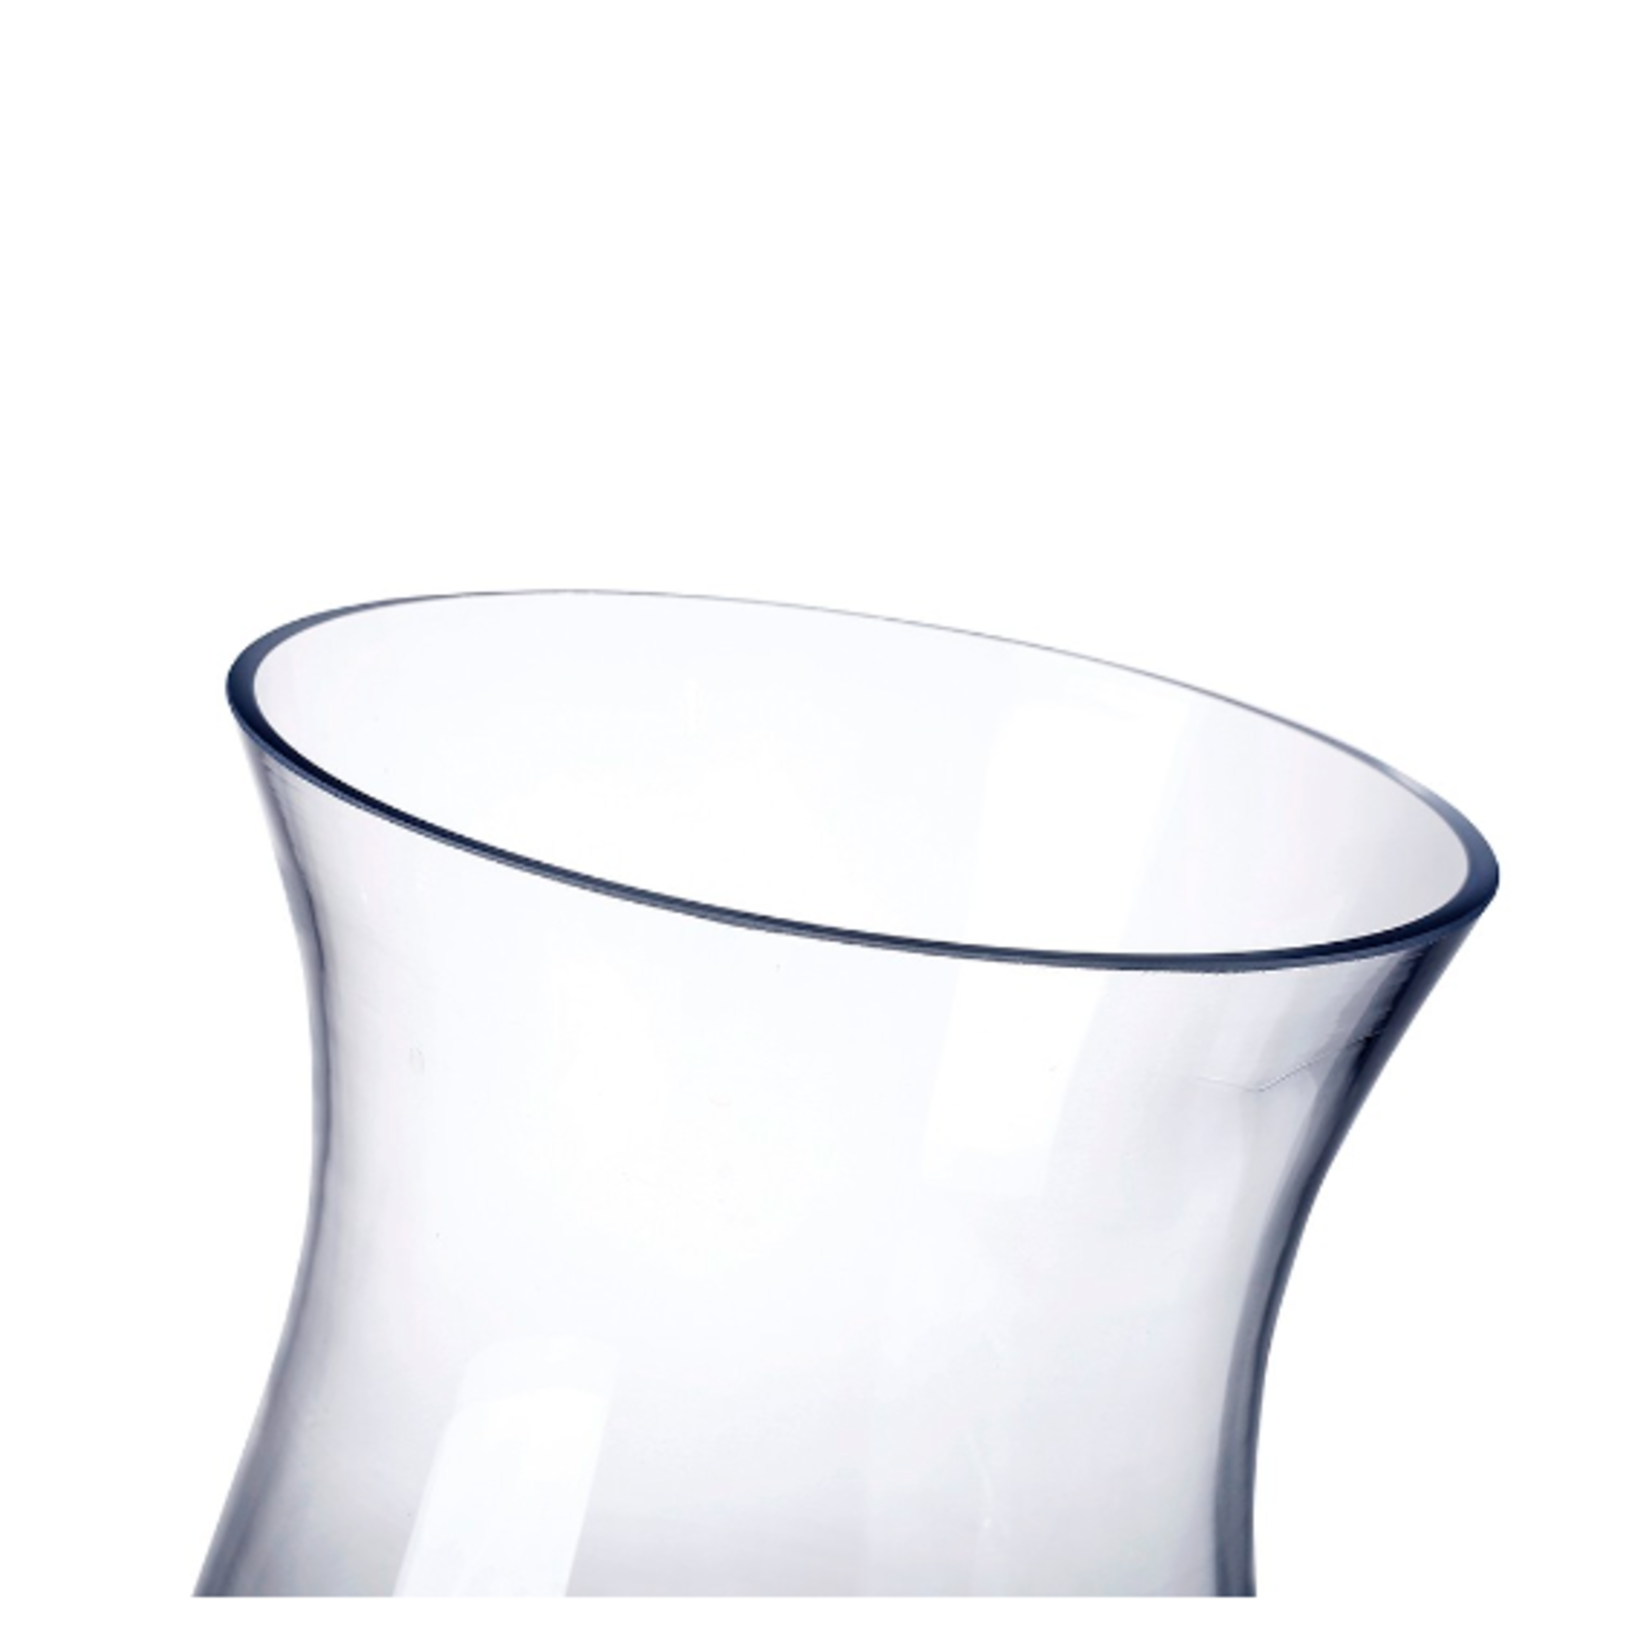 8”H X 4.5” GLASS PEDESTAL HURRICANE VASE